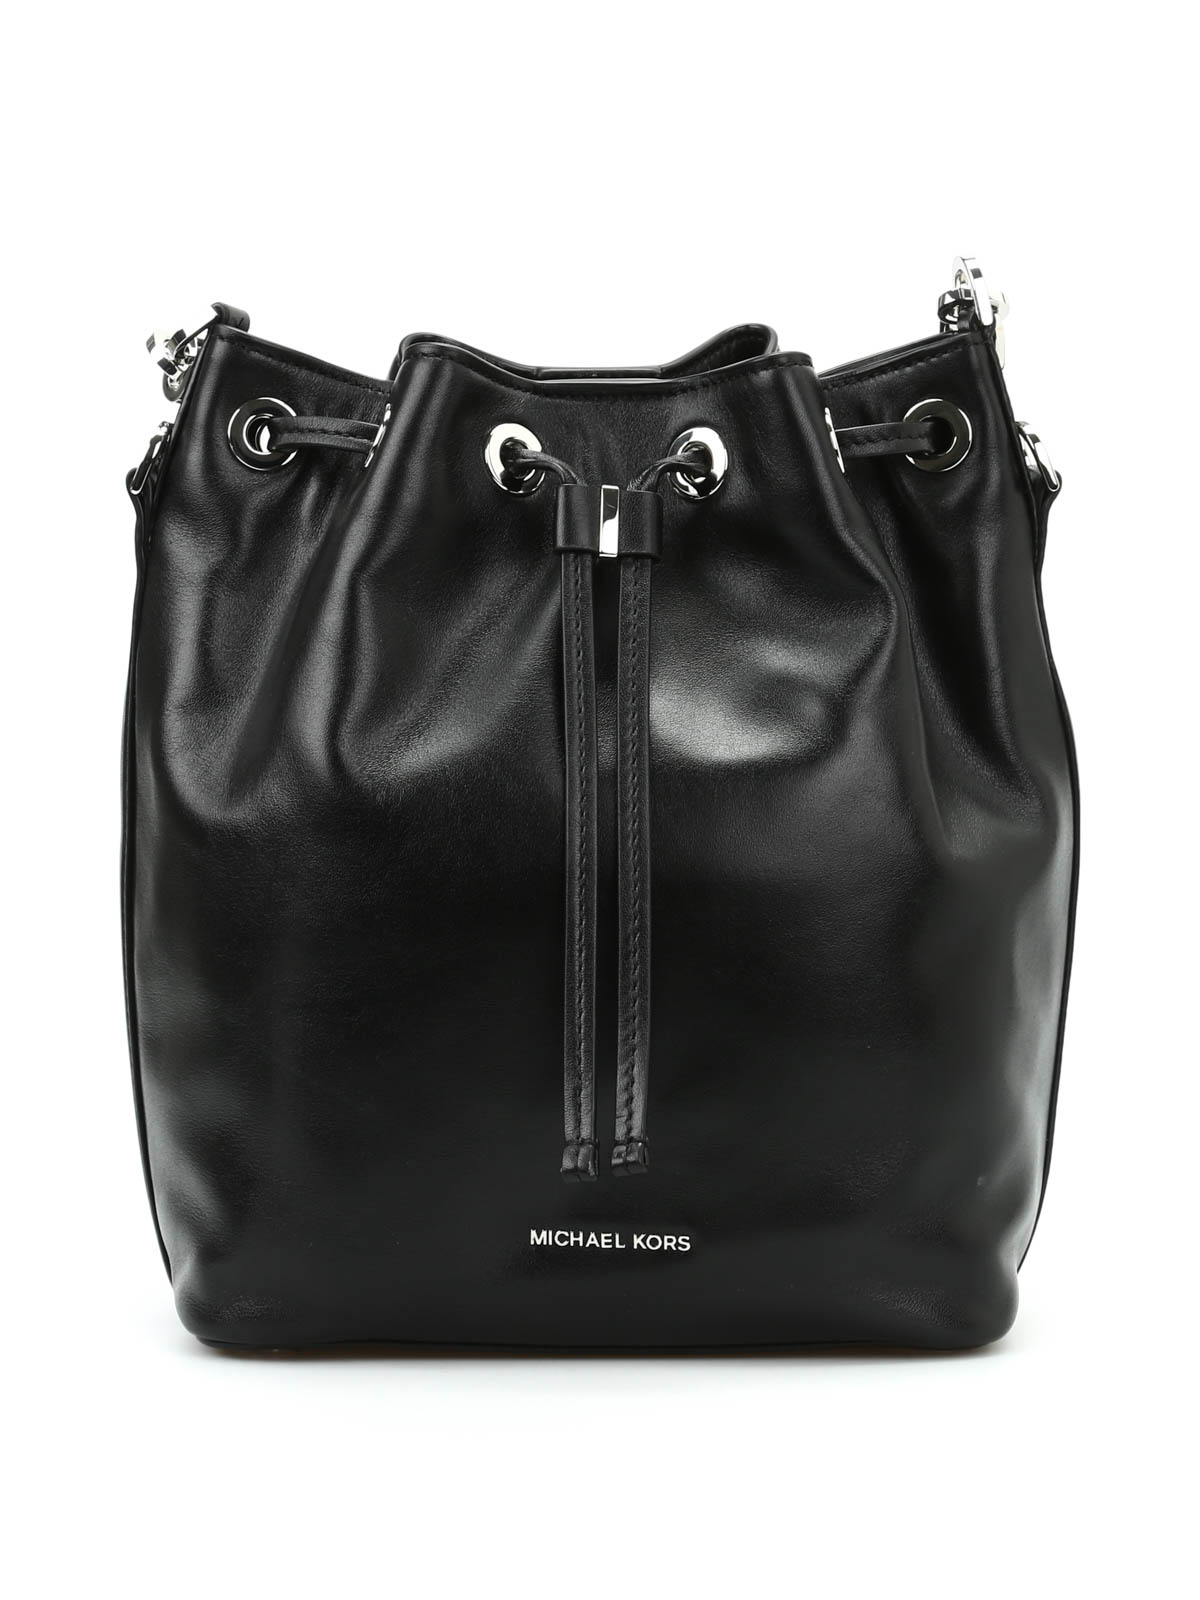 Michael Kors Devon Medium Pebbled Leather Bucket Bag, Black - iCuracao.com